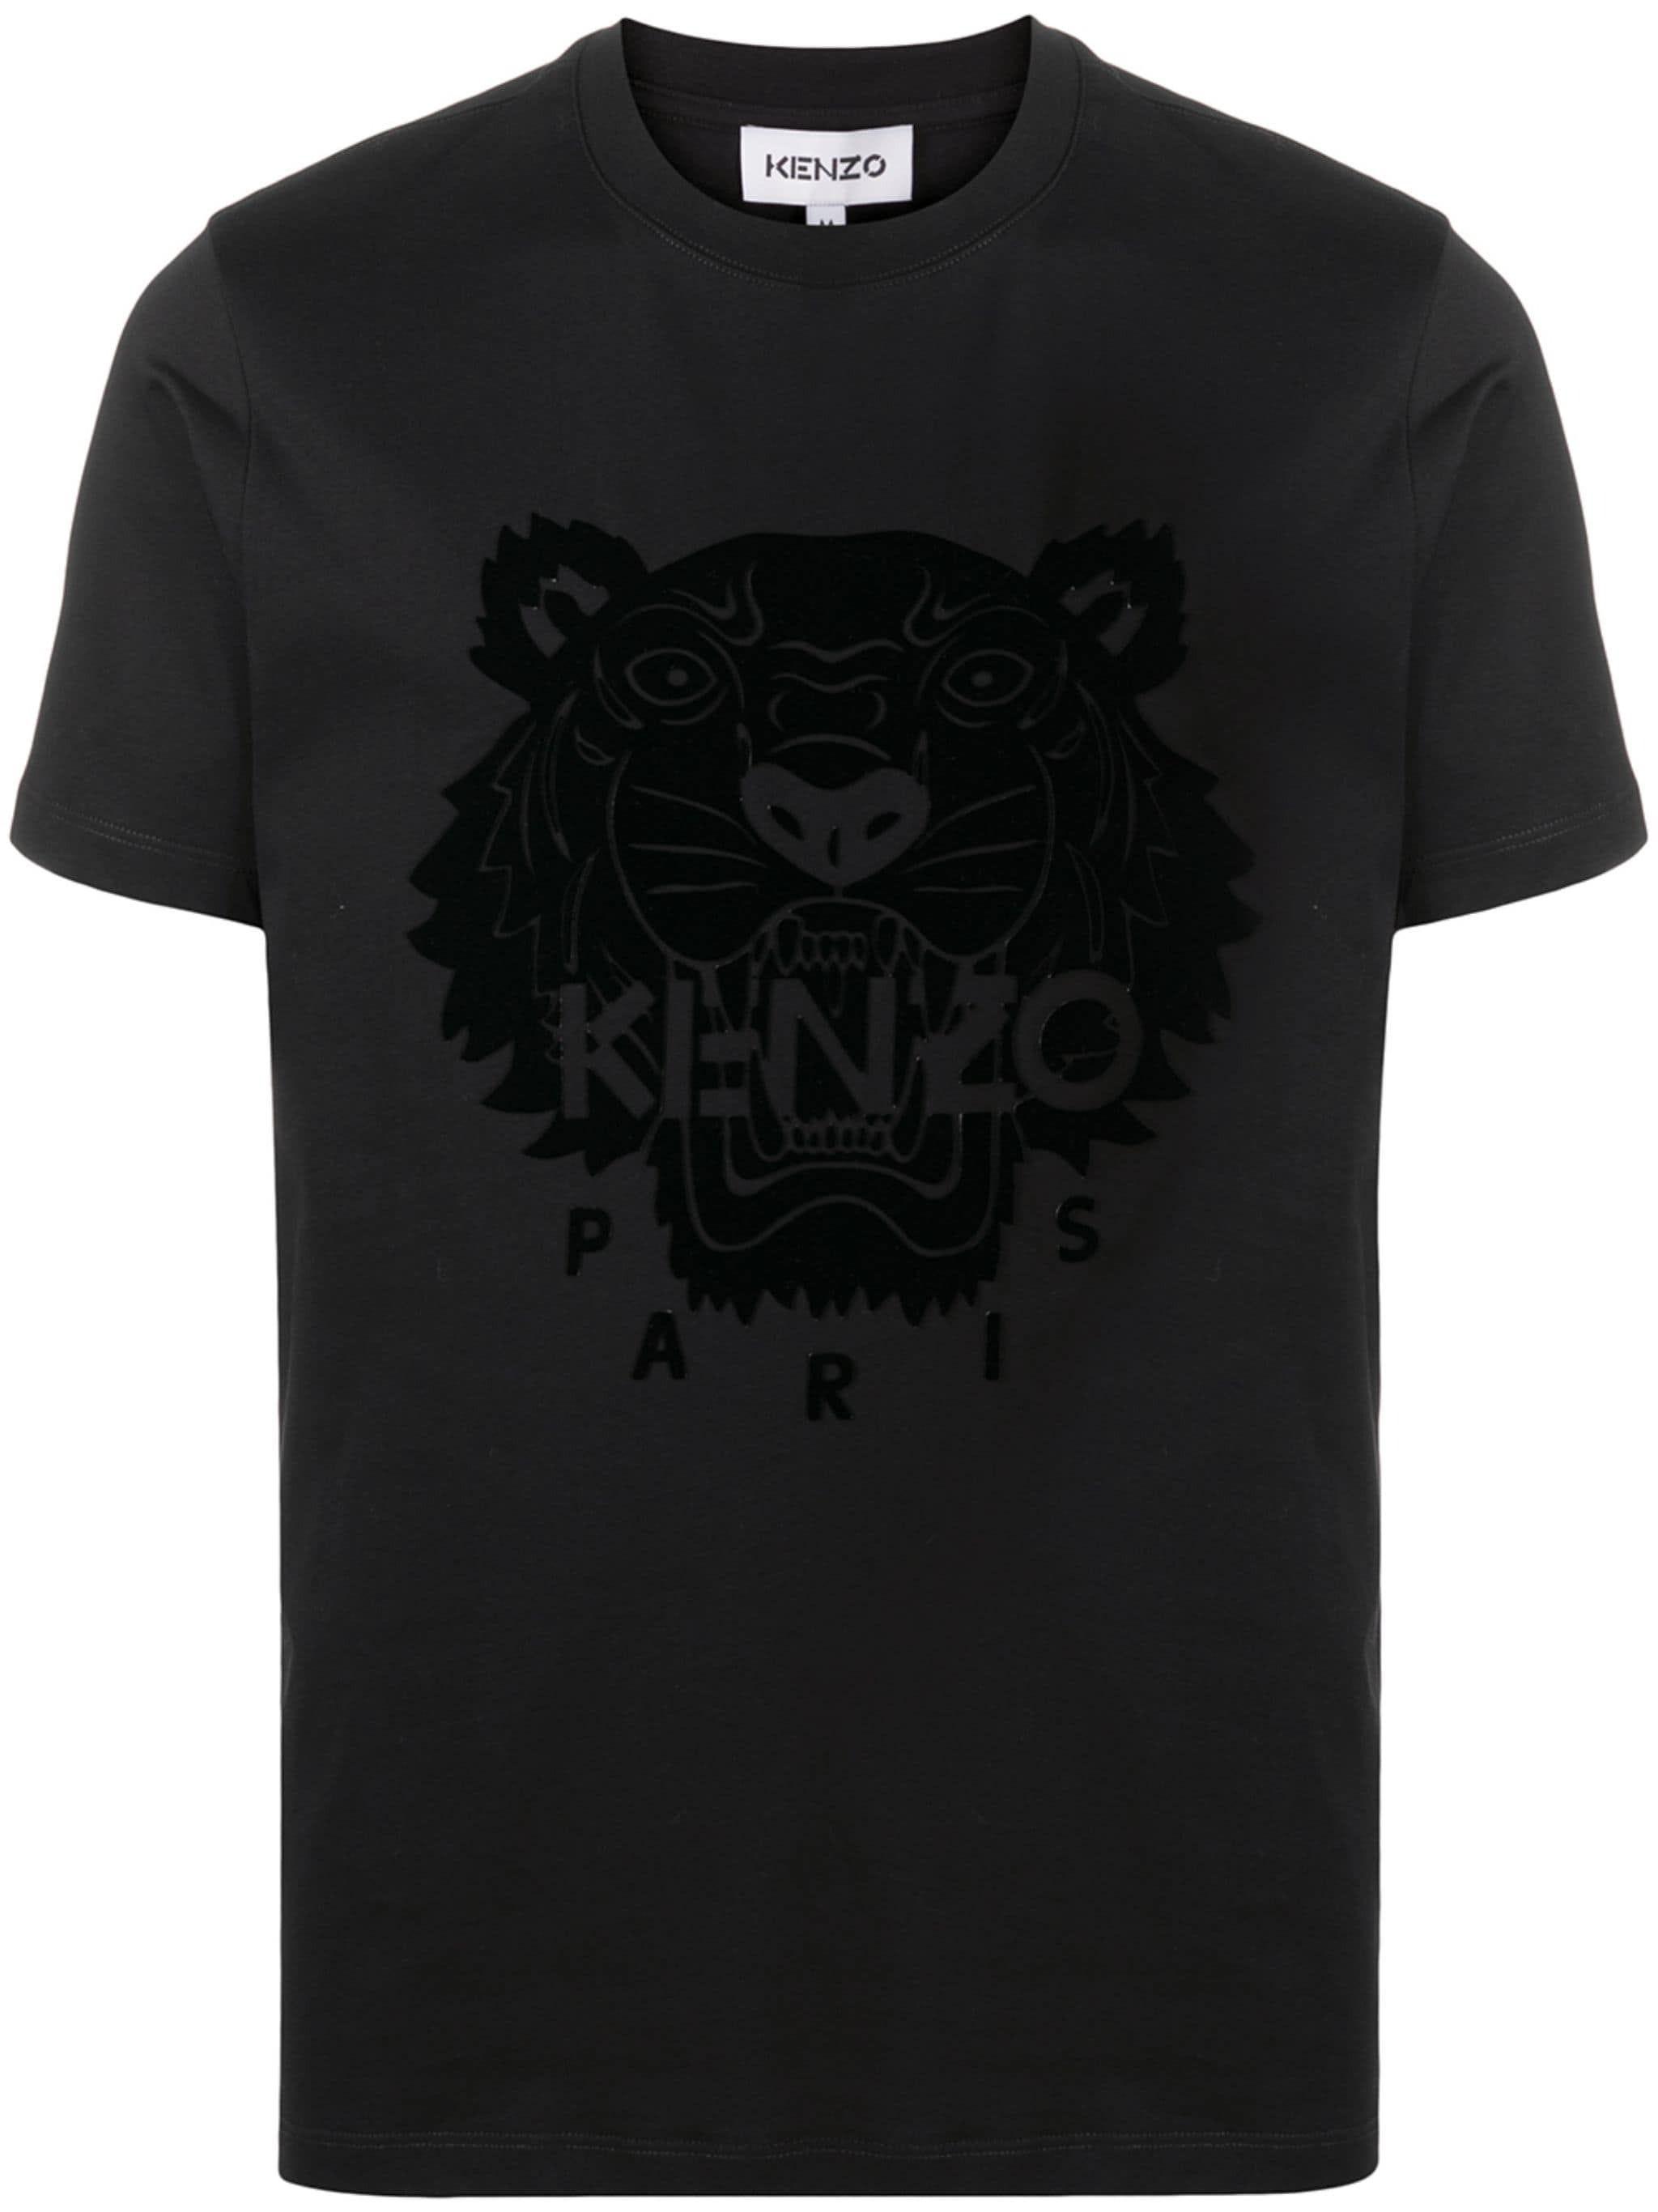 kenzo t shirt tiger black